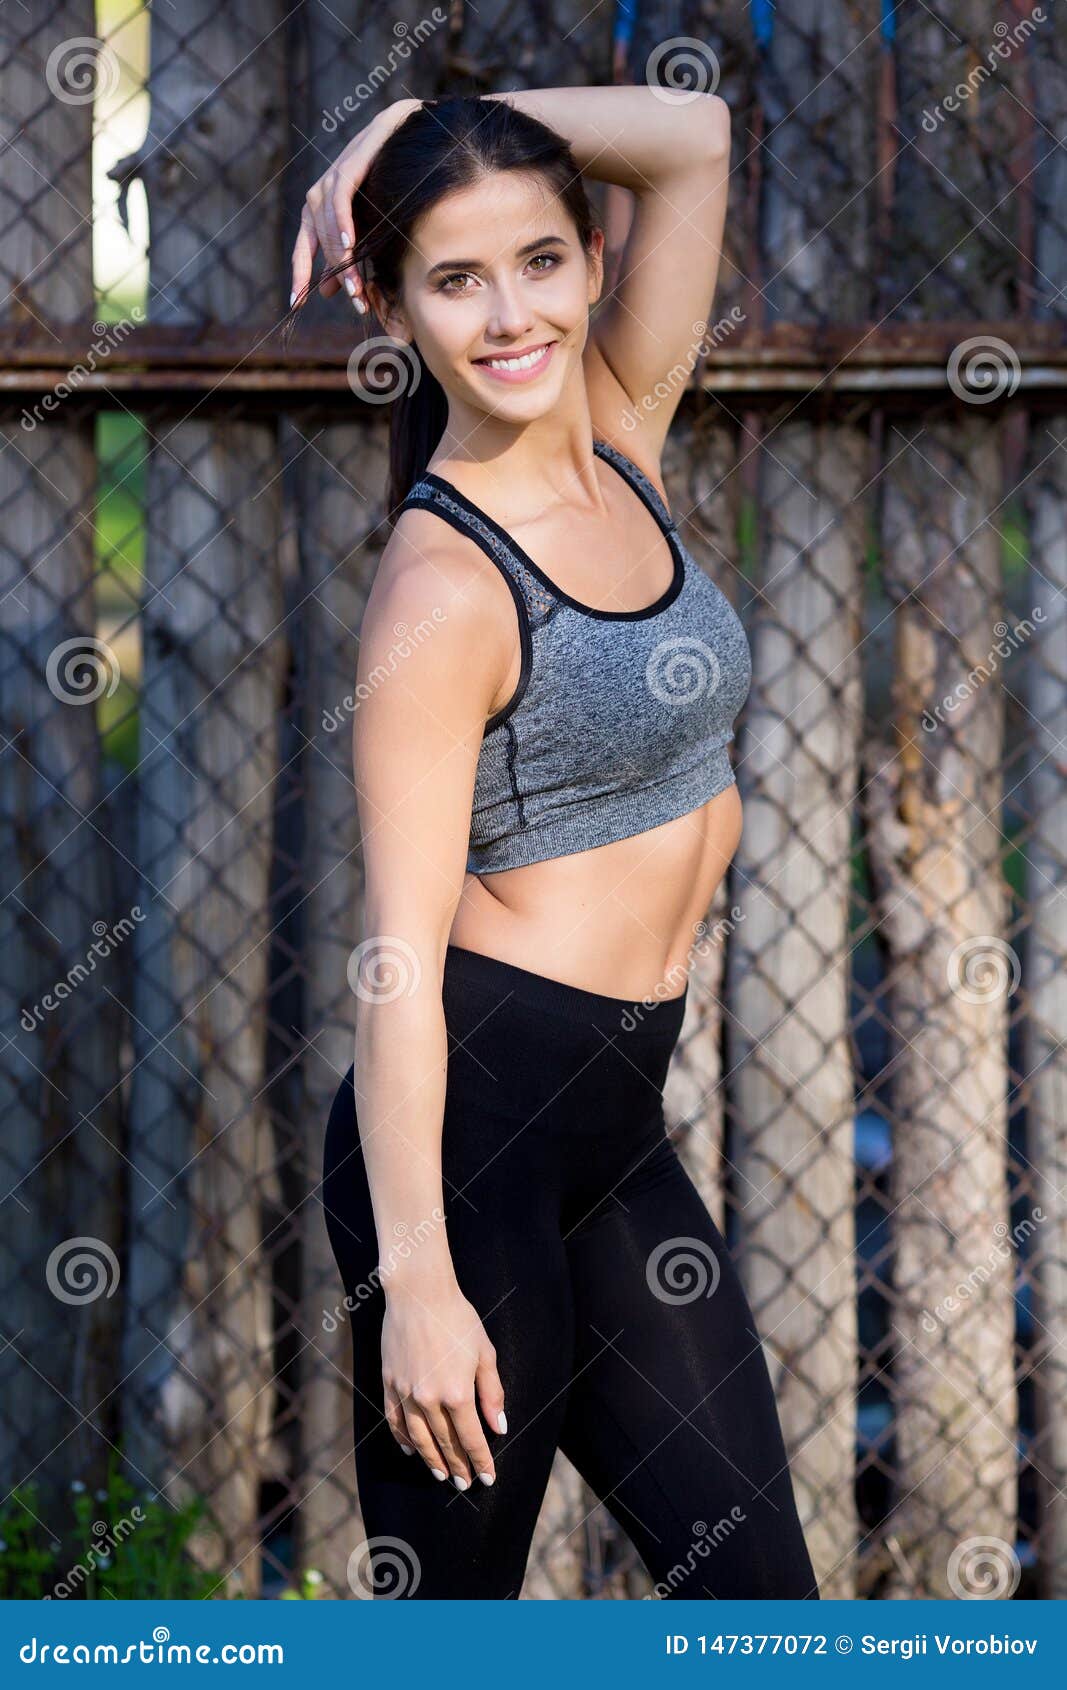 https://thumbs.dreamstime.com/z/lifestyle-portrait-fitness-pretty-young-woman-wearing-grey-sports-bra-black-pants-fresh-healthy-stylish-sport-girl-posing-147377072.jpg